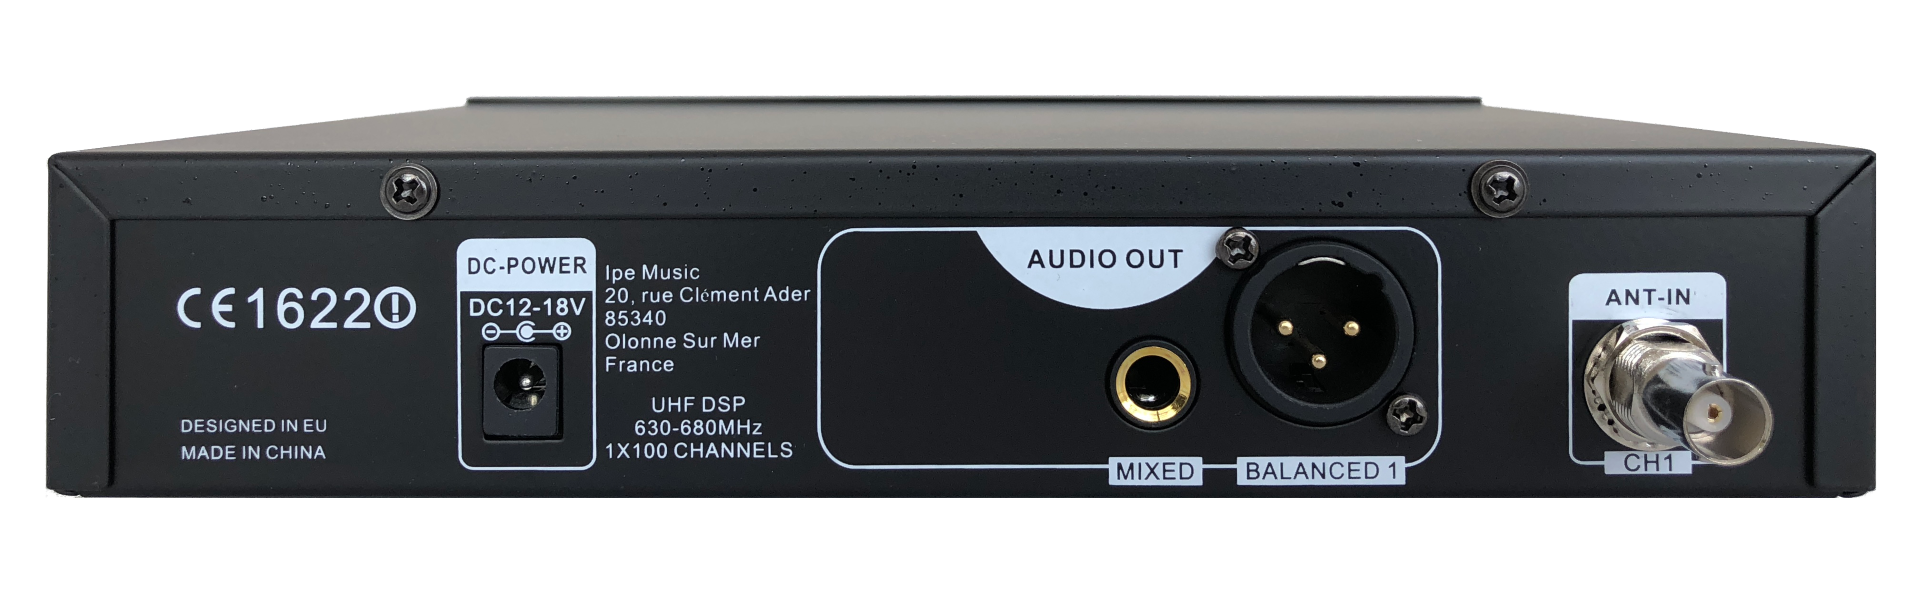 Prodipe Audio UHF DSP GB210 Solo 